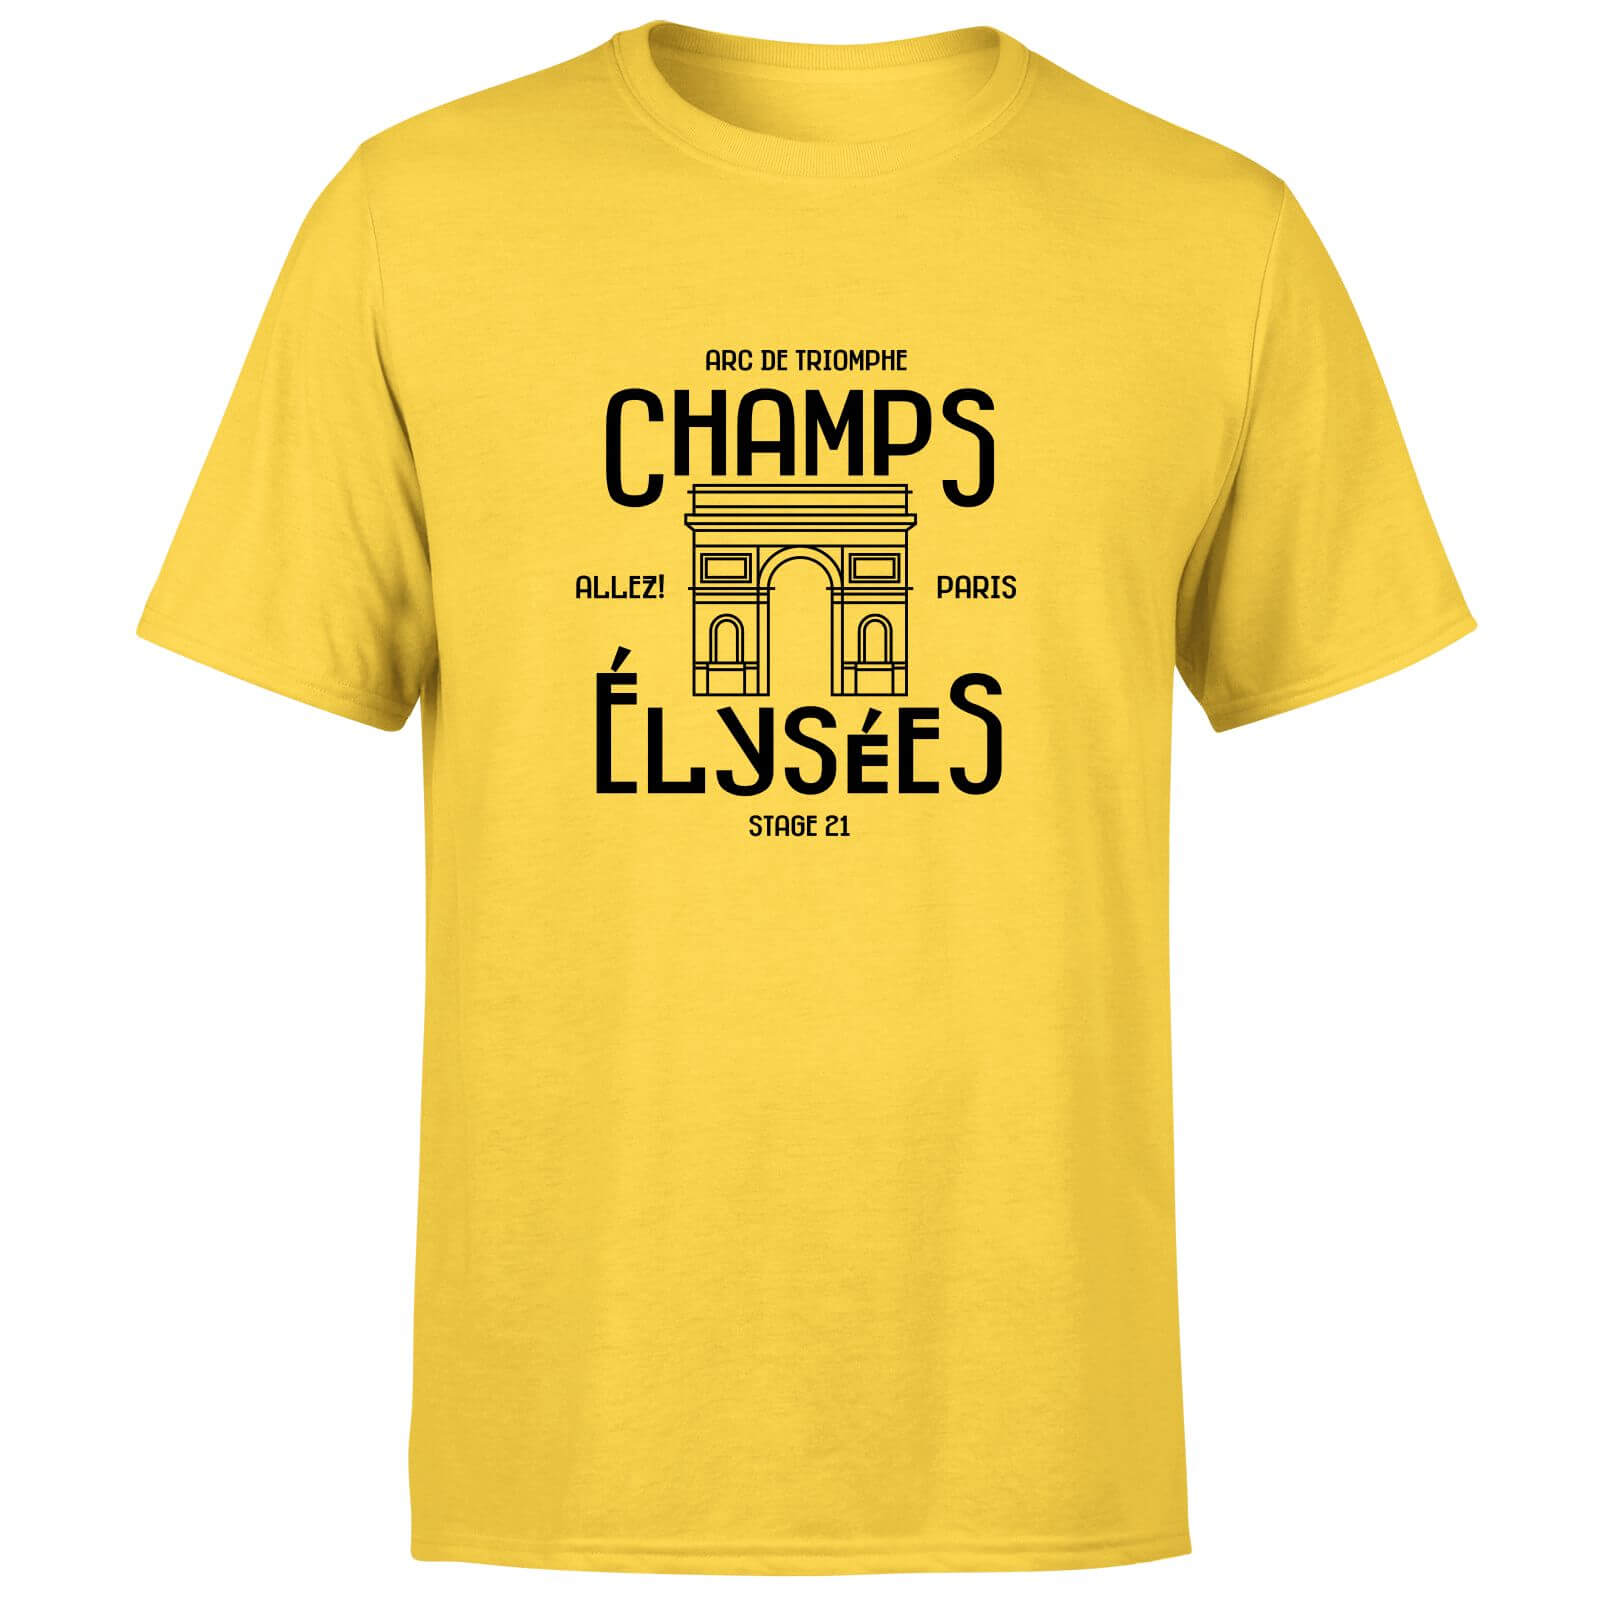 Champs Elysees Winner Men's T-Shirt - Yellow - L - Yellow